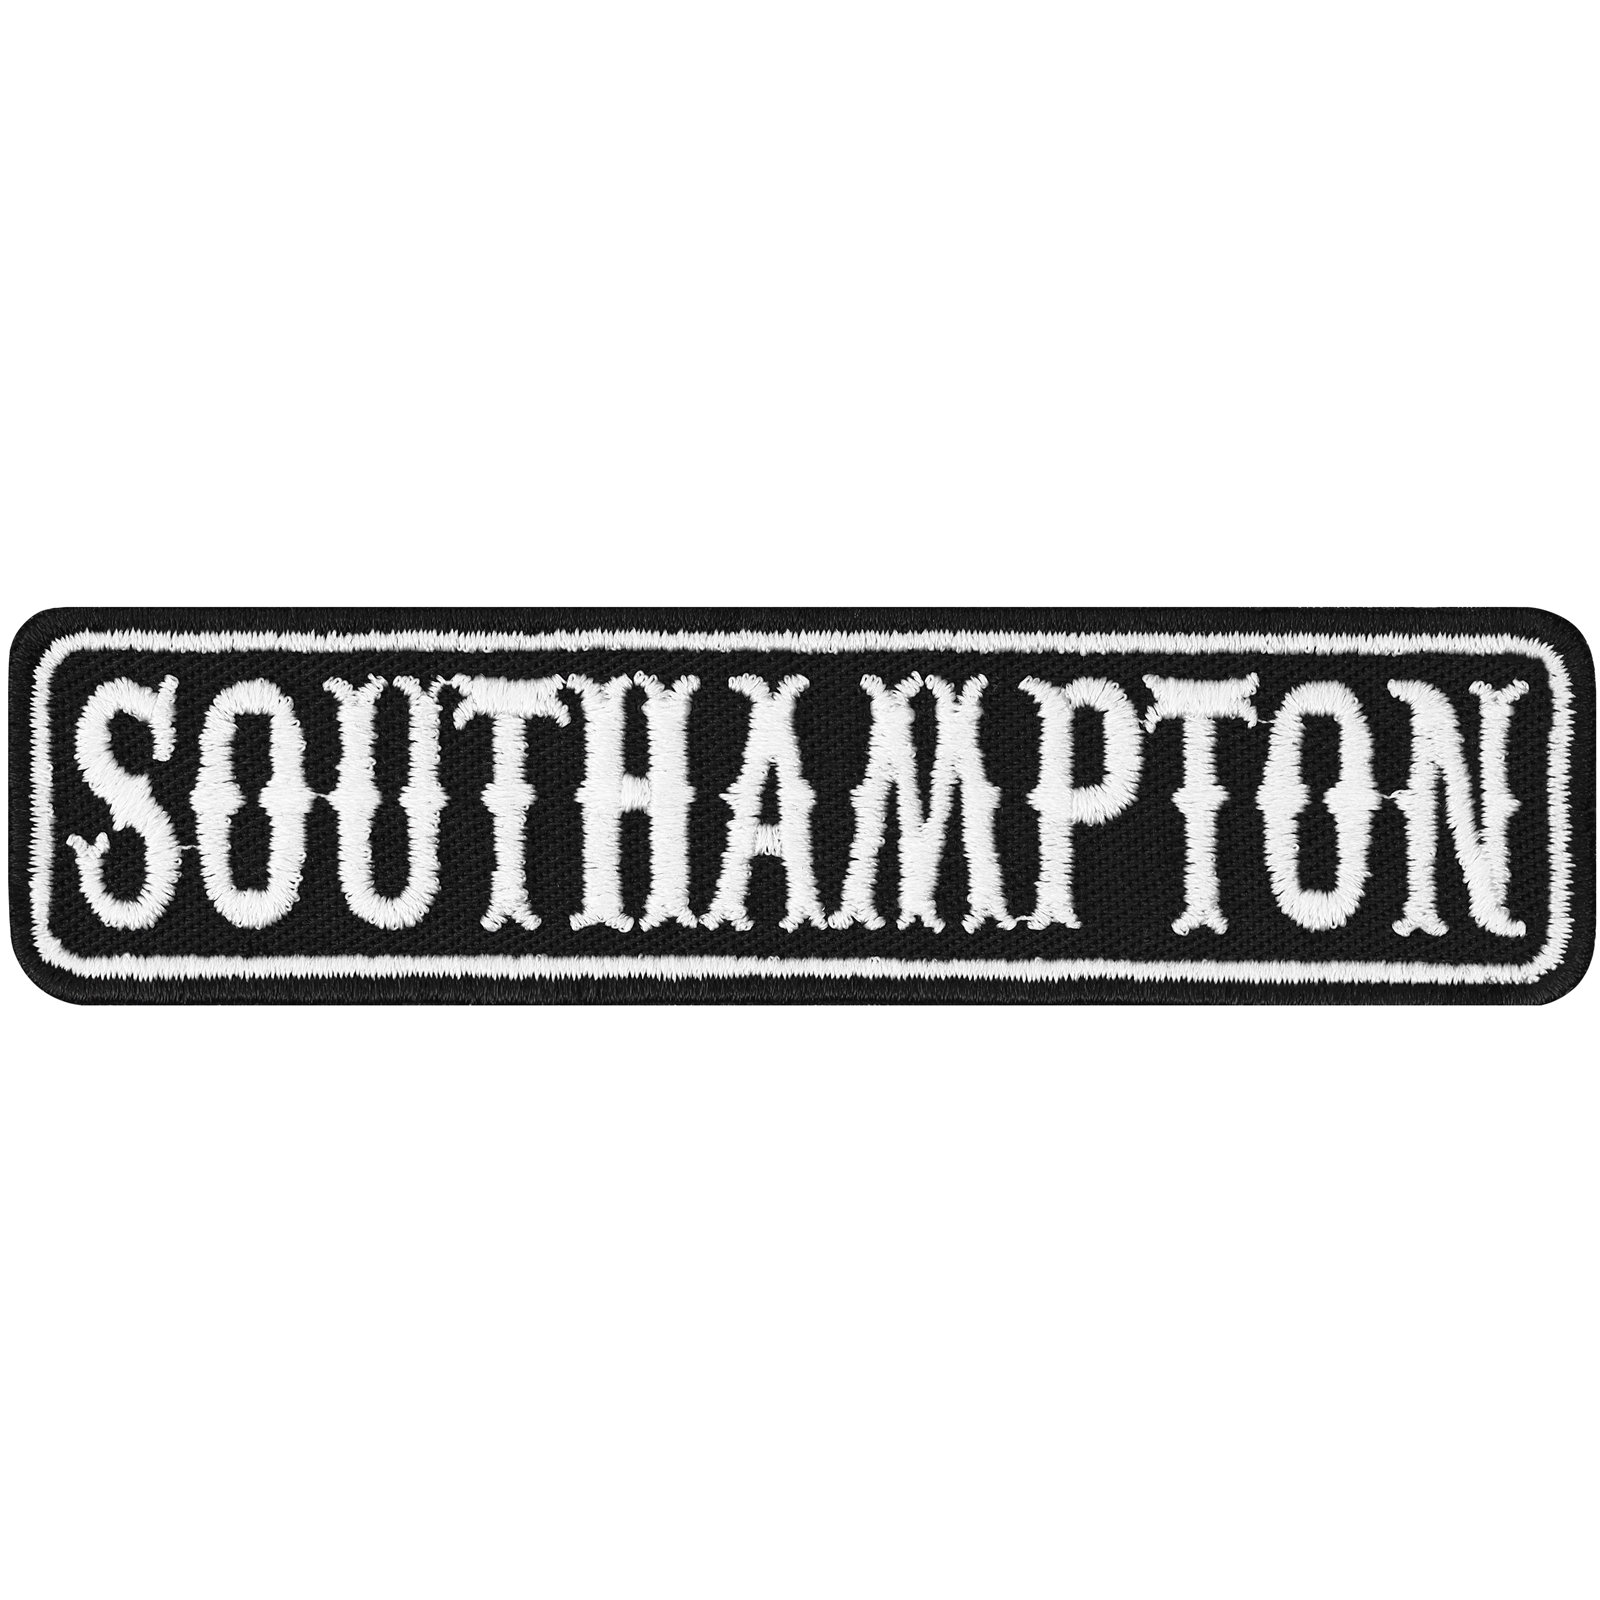 Southhampton - Patch